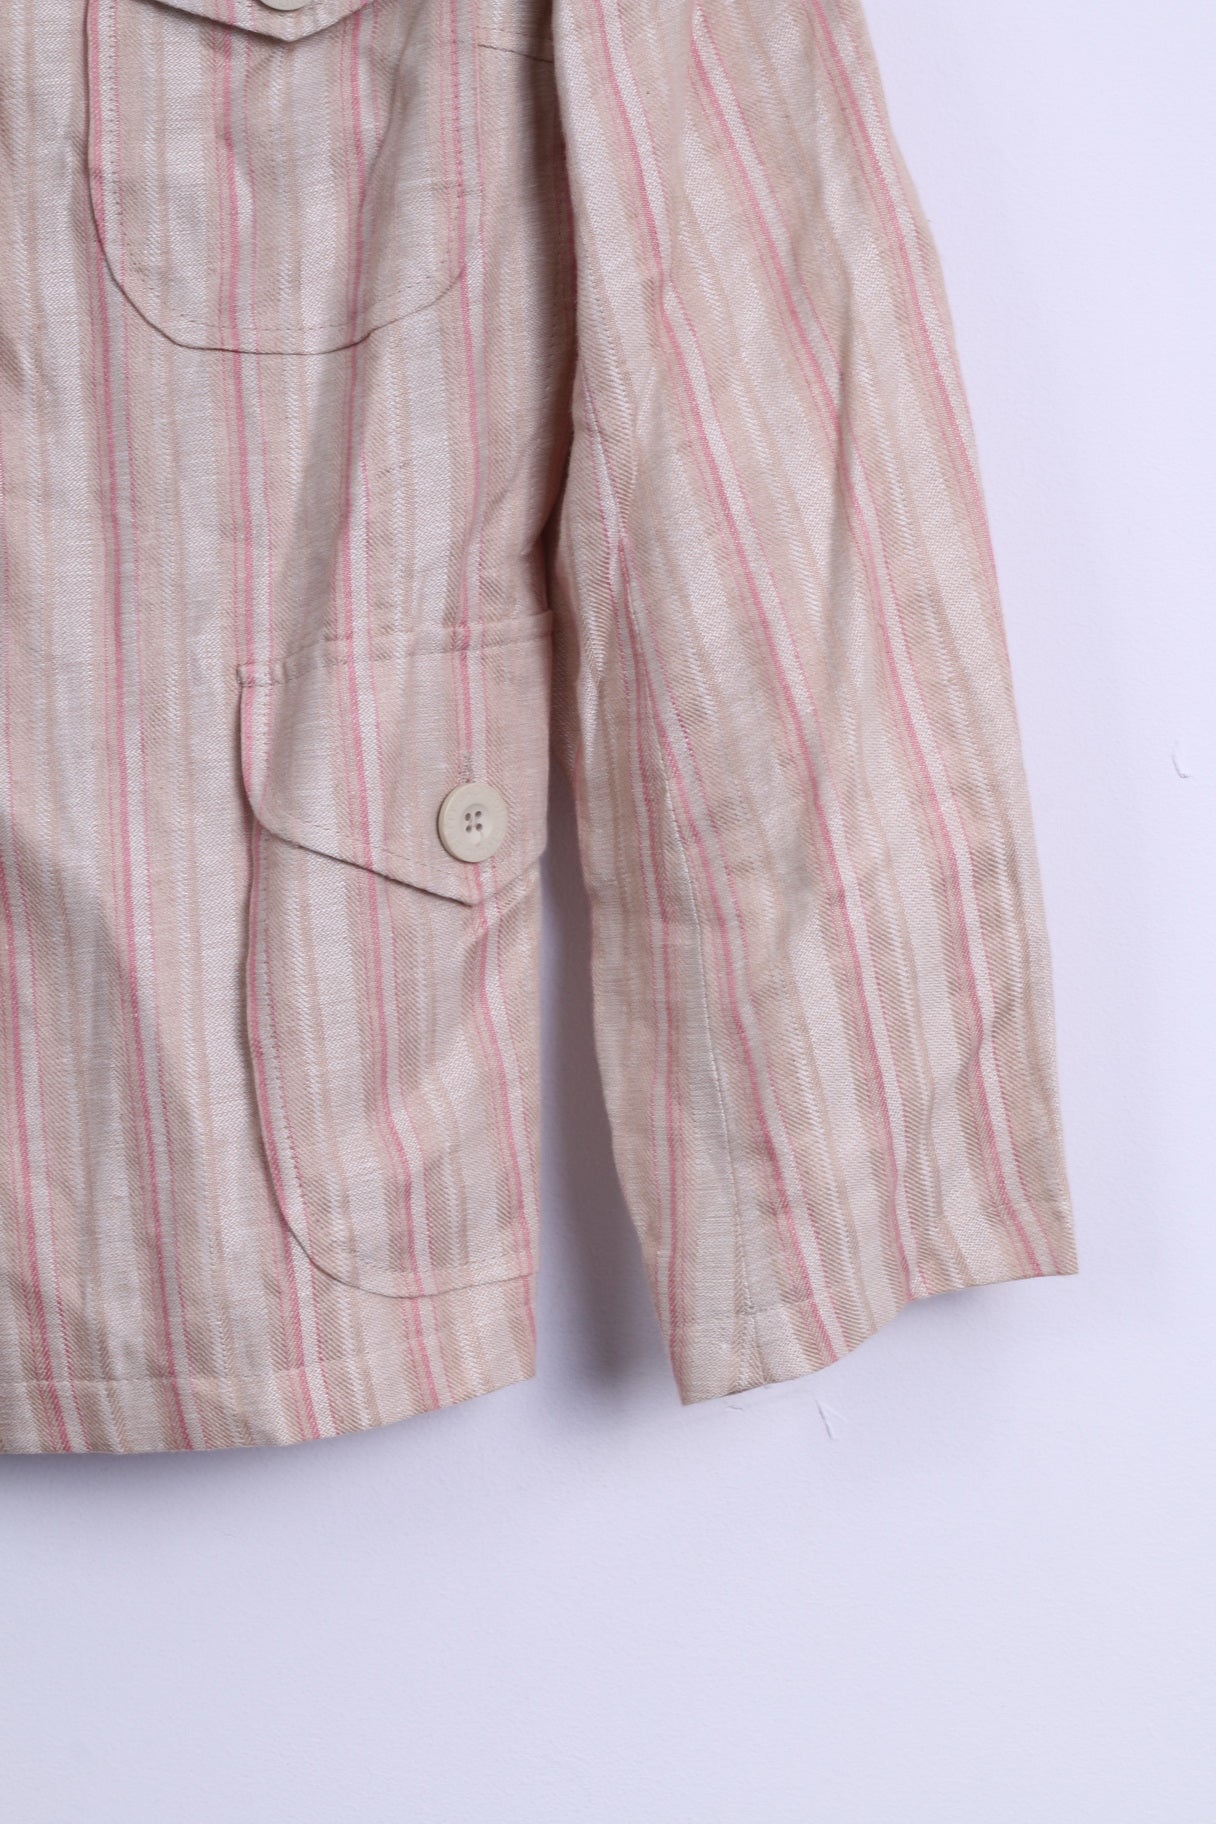 Betty Jackson Studio Womens M Jacket Beige Linen Striped Big Buttons Blazer